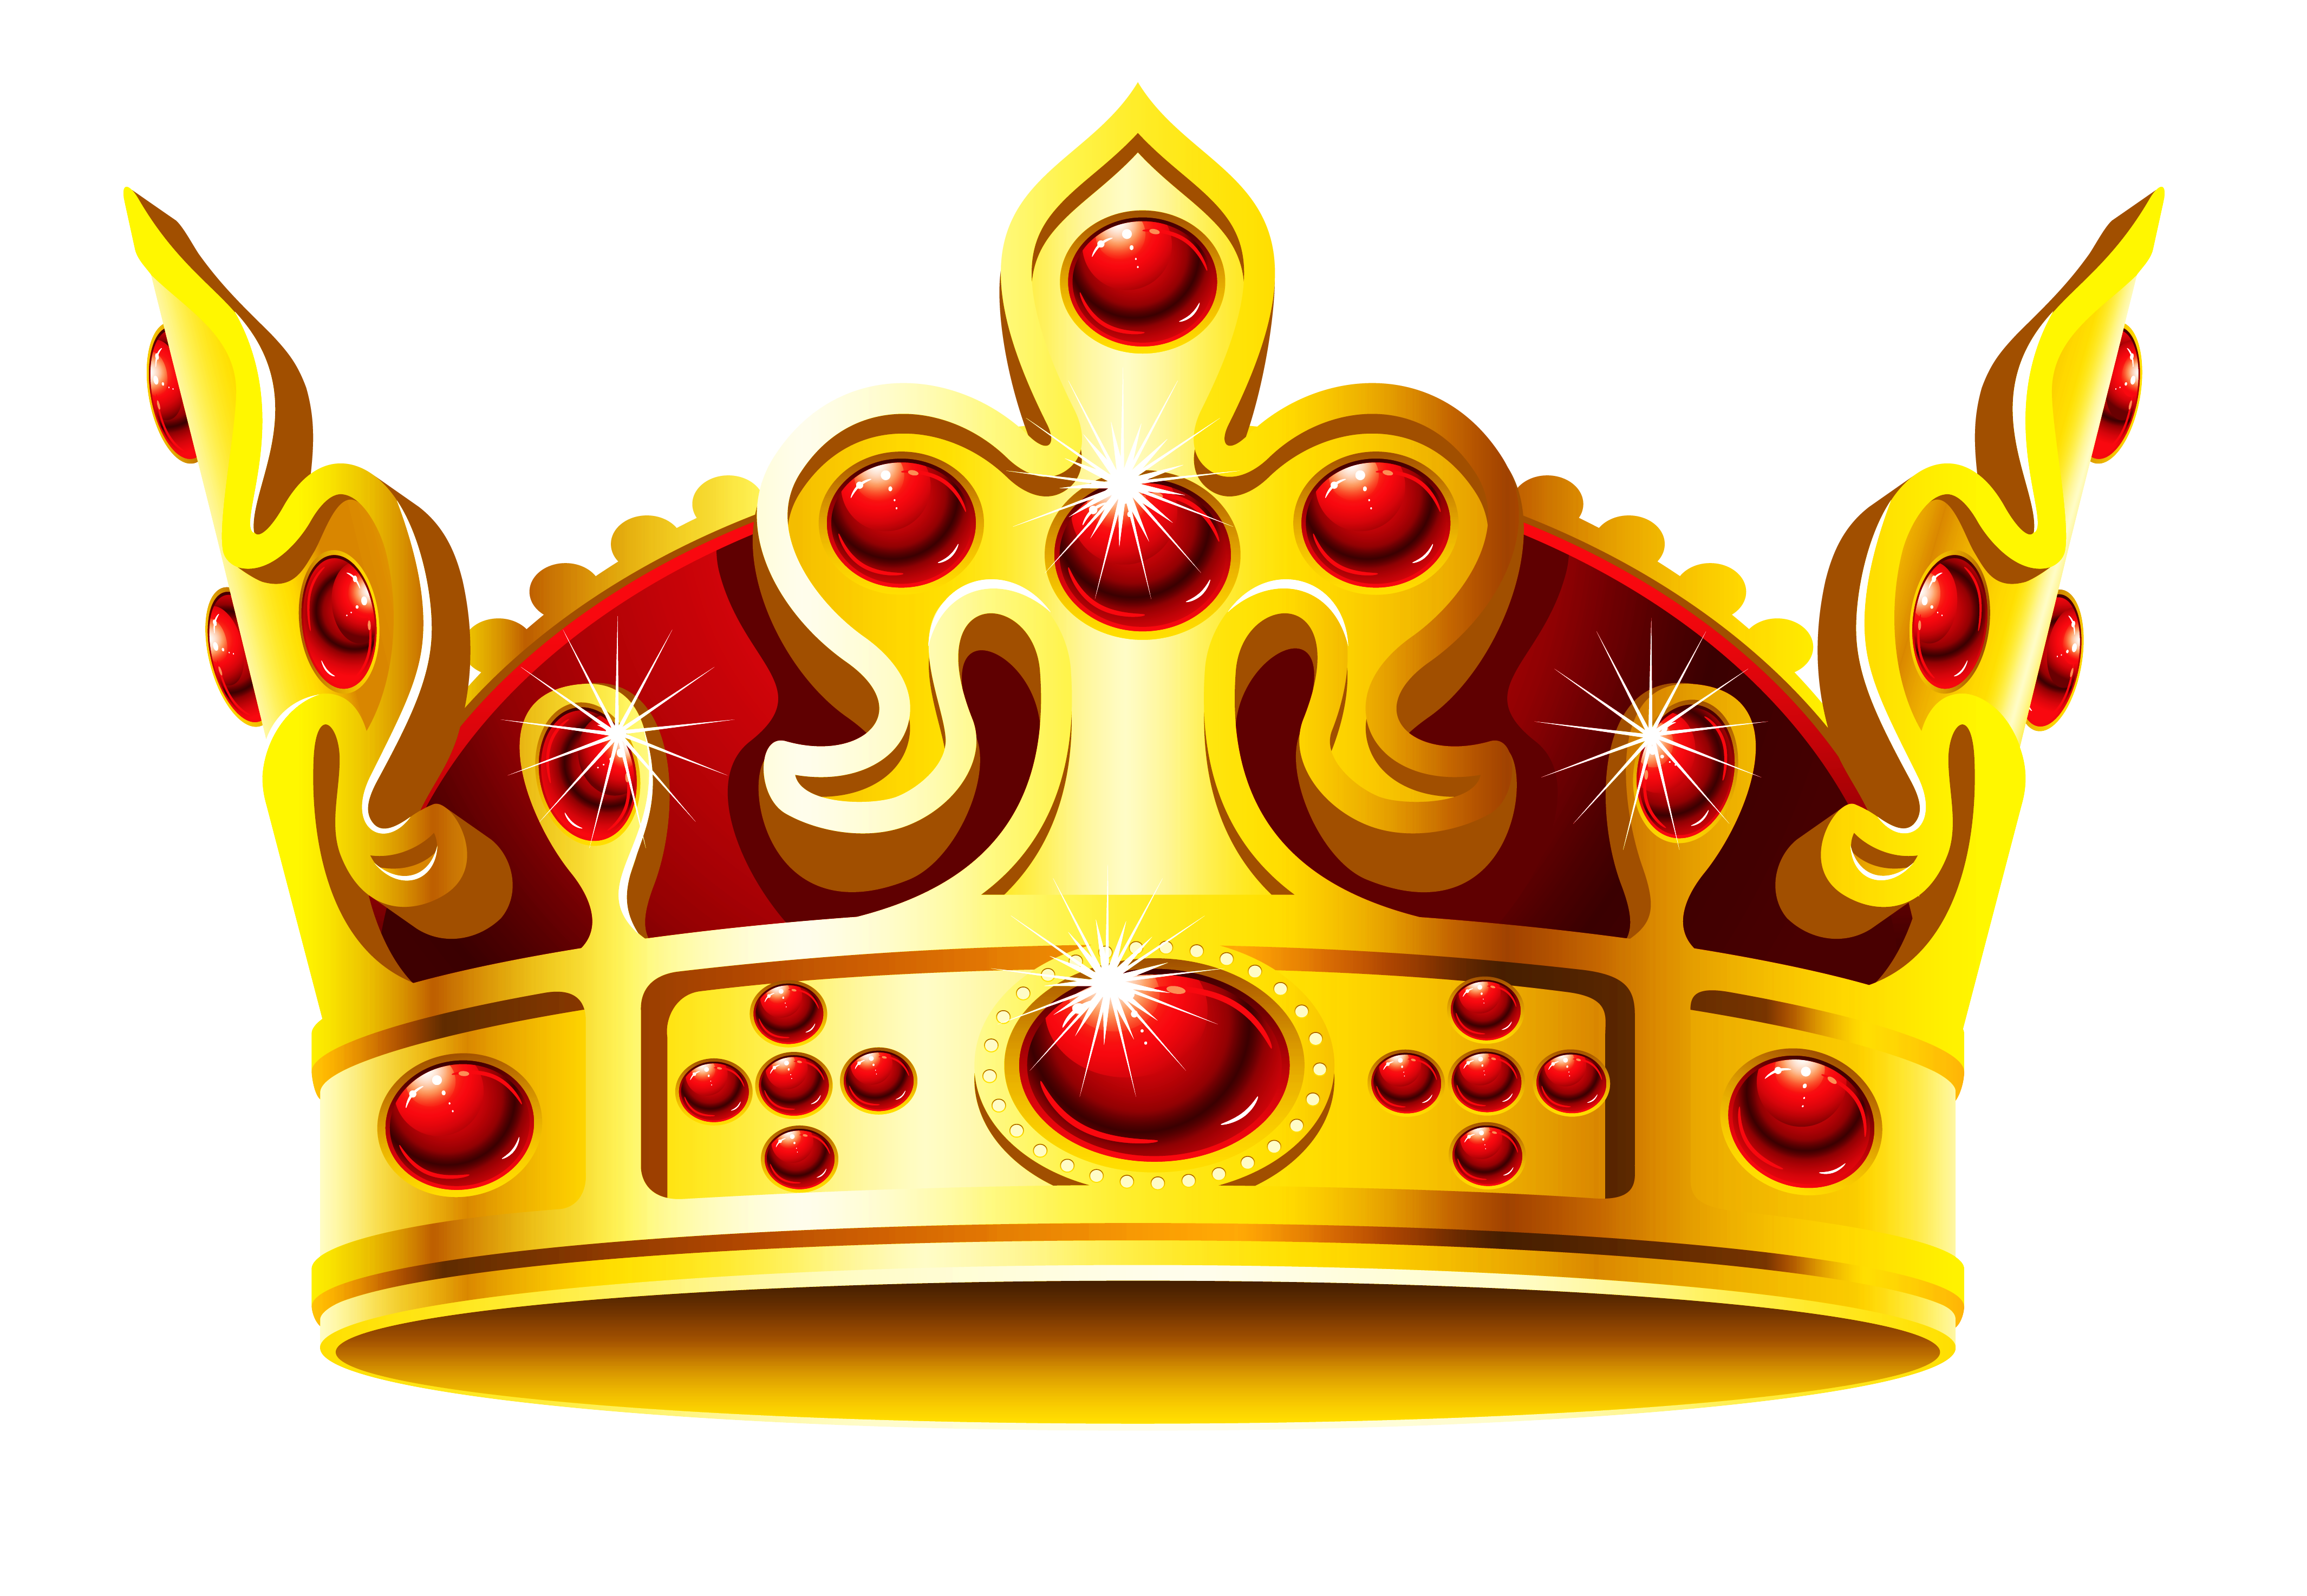 King Crown Queen regnant - Go